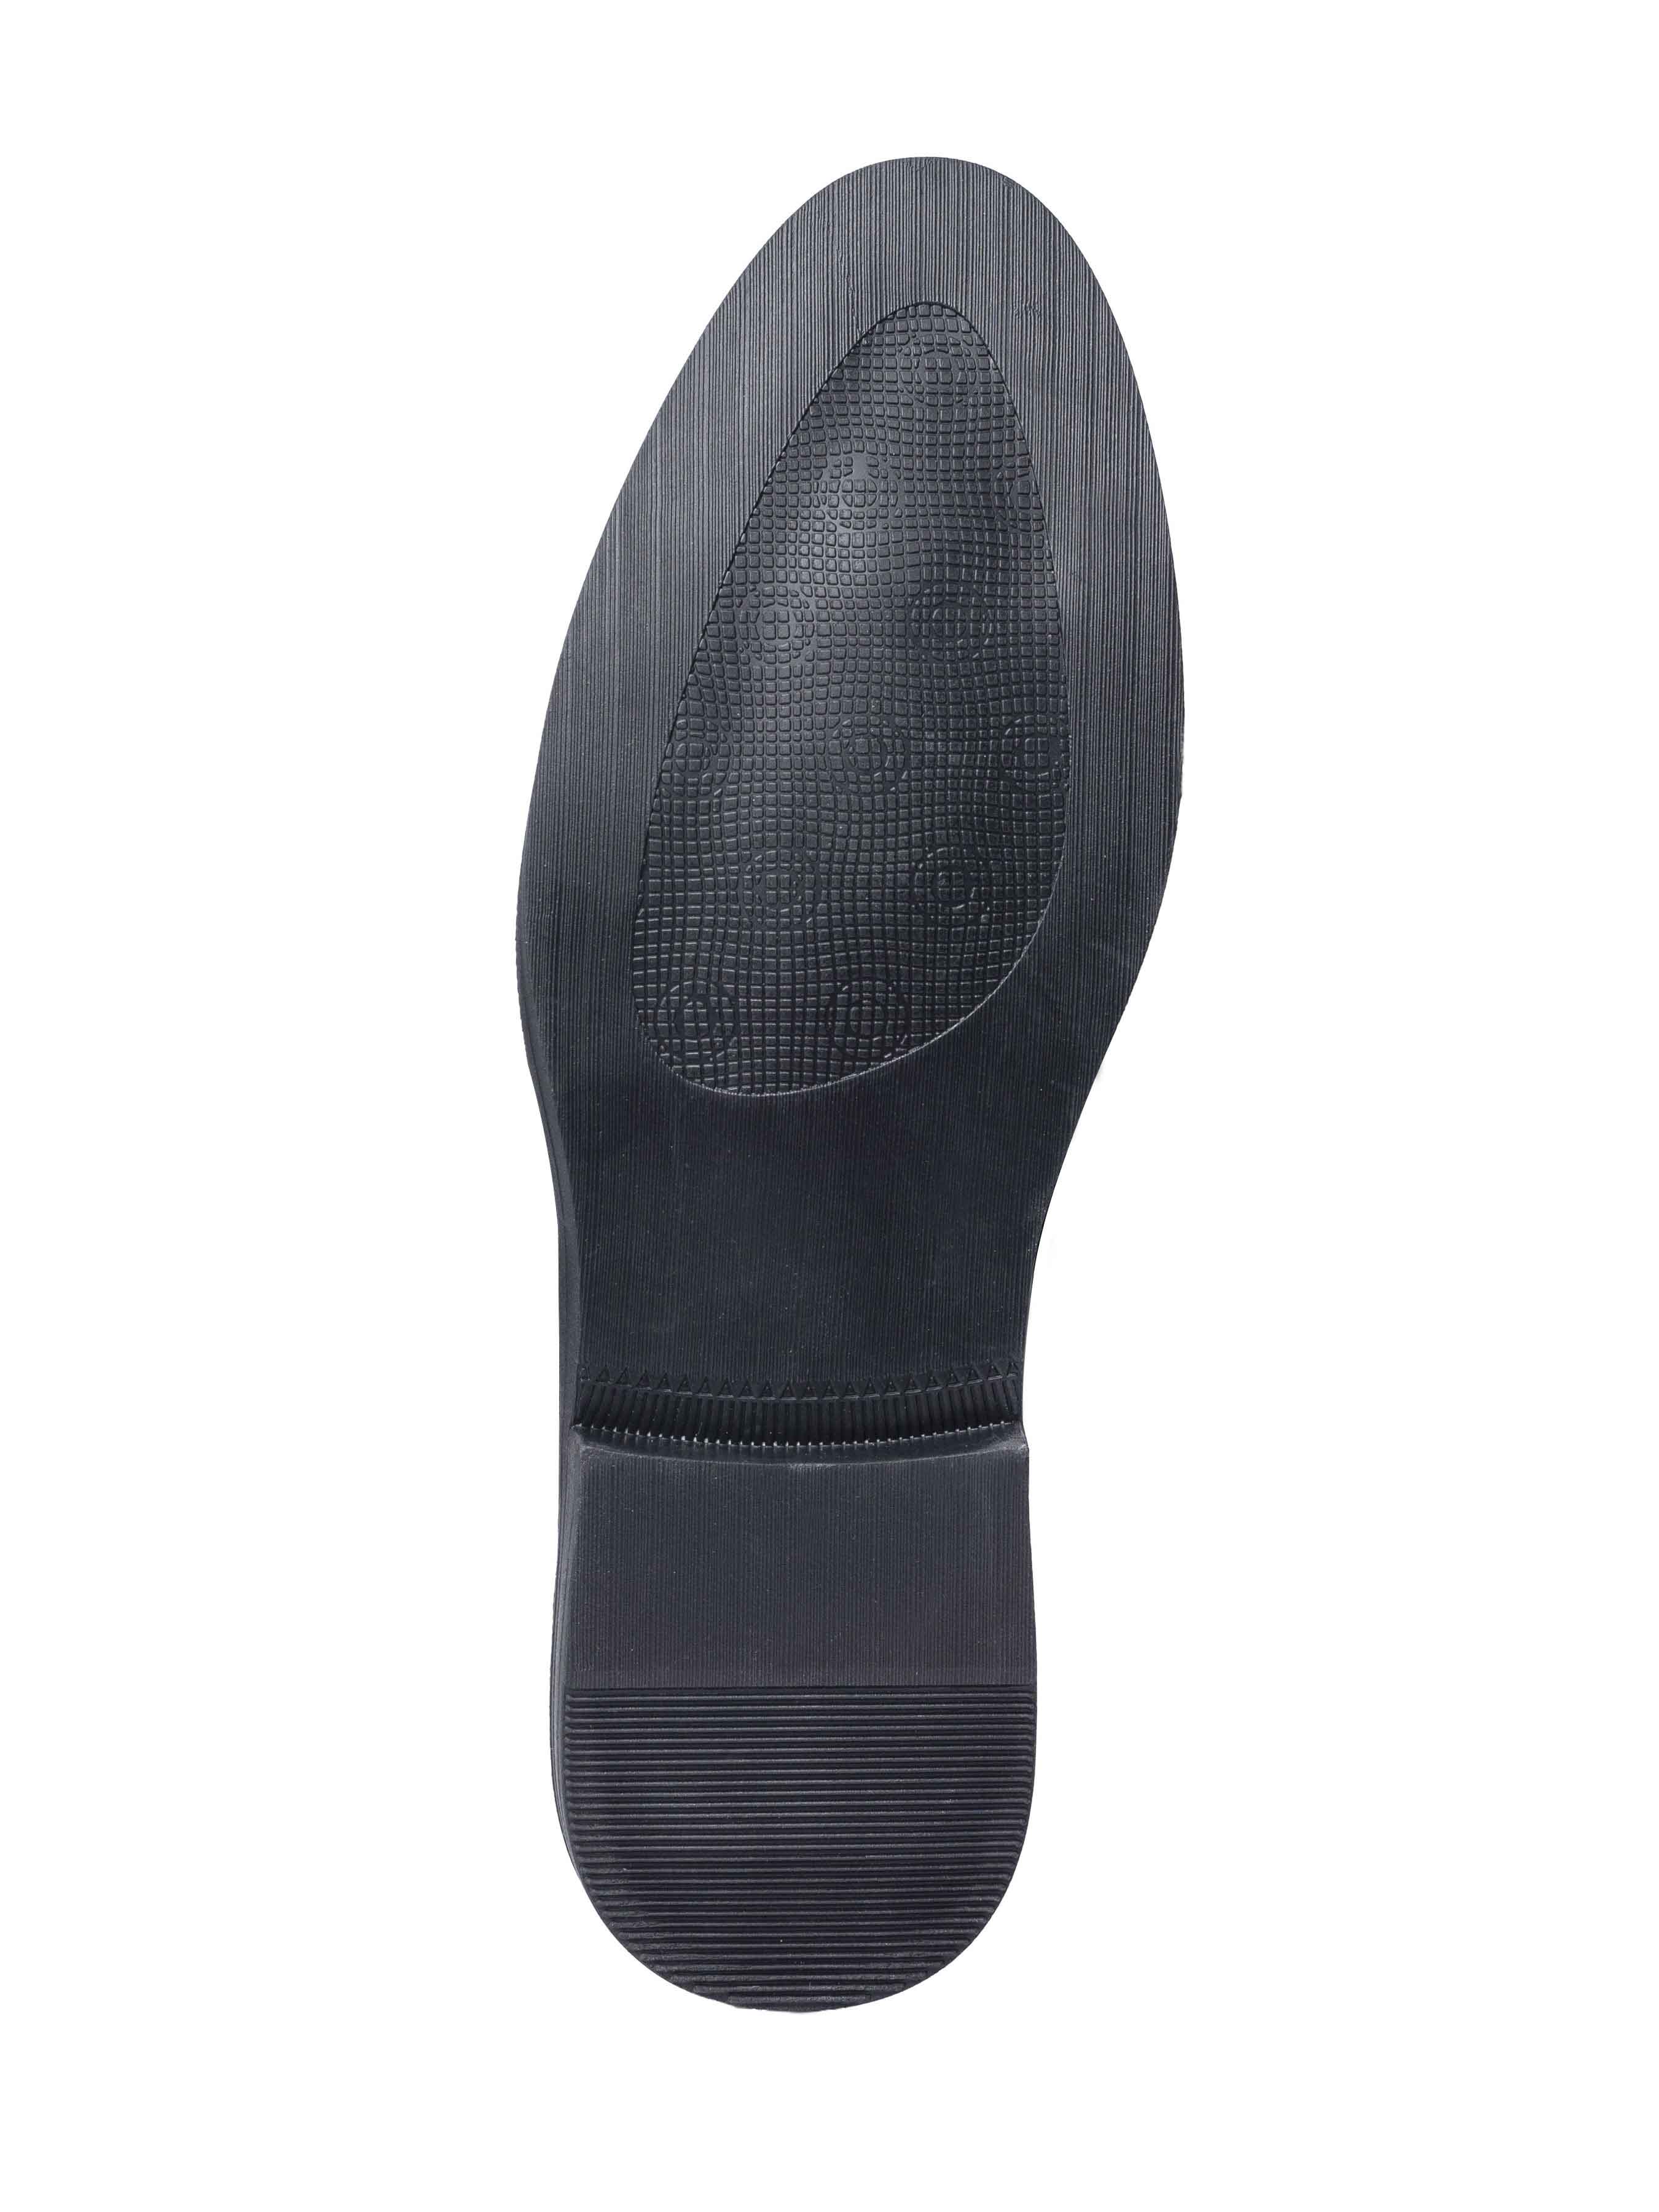 Horsebit Buckle Loafer - Black Pebble Grain Leather (Flexi-Sole)